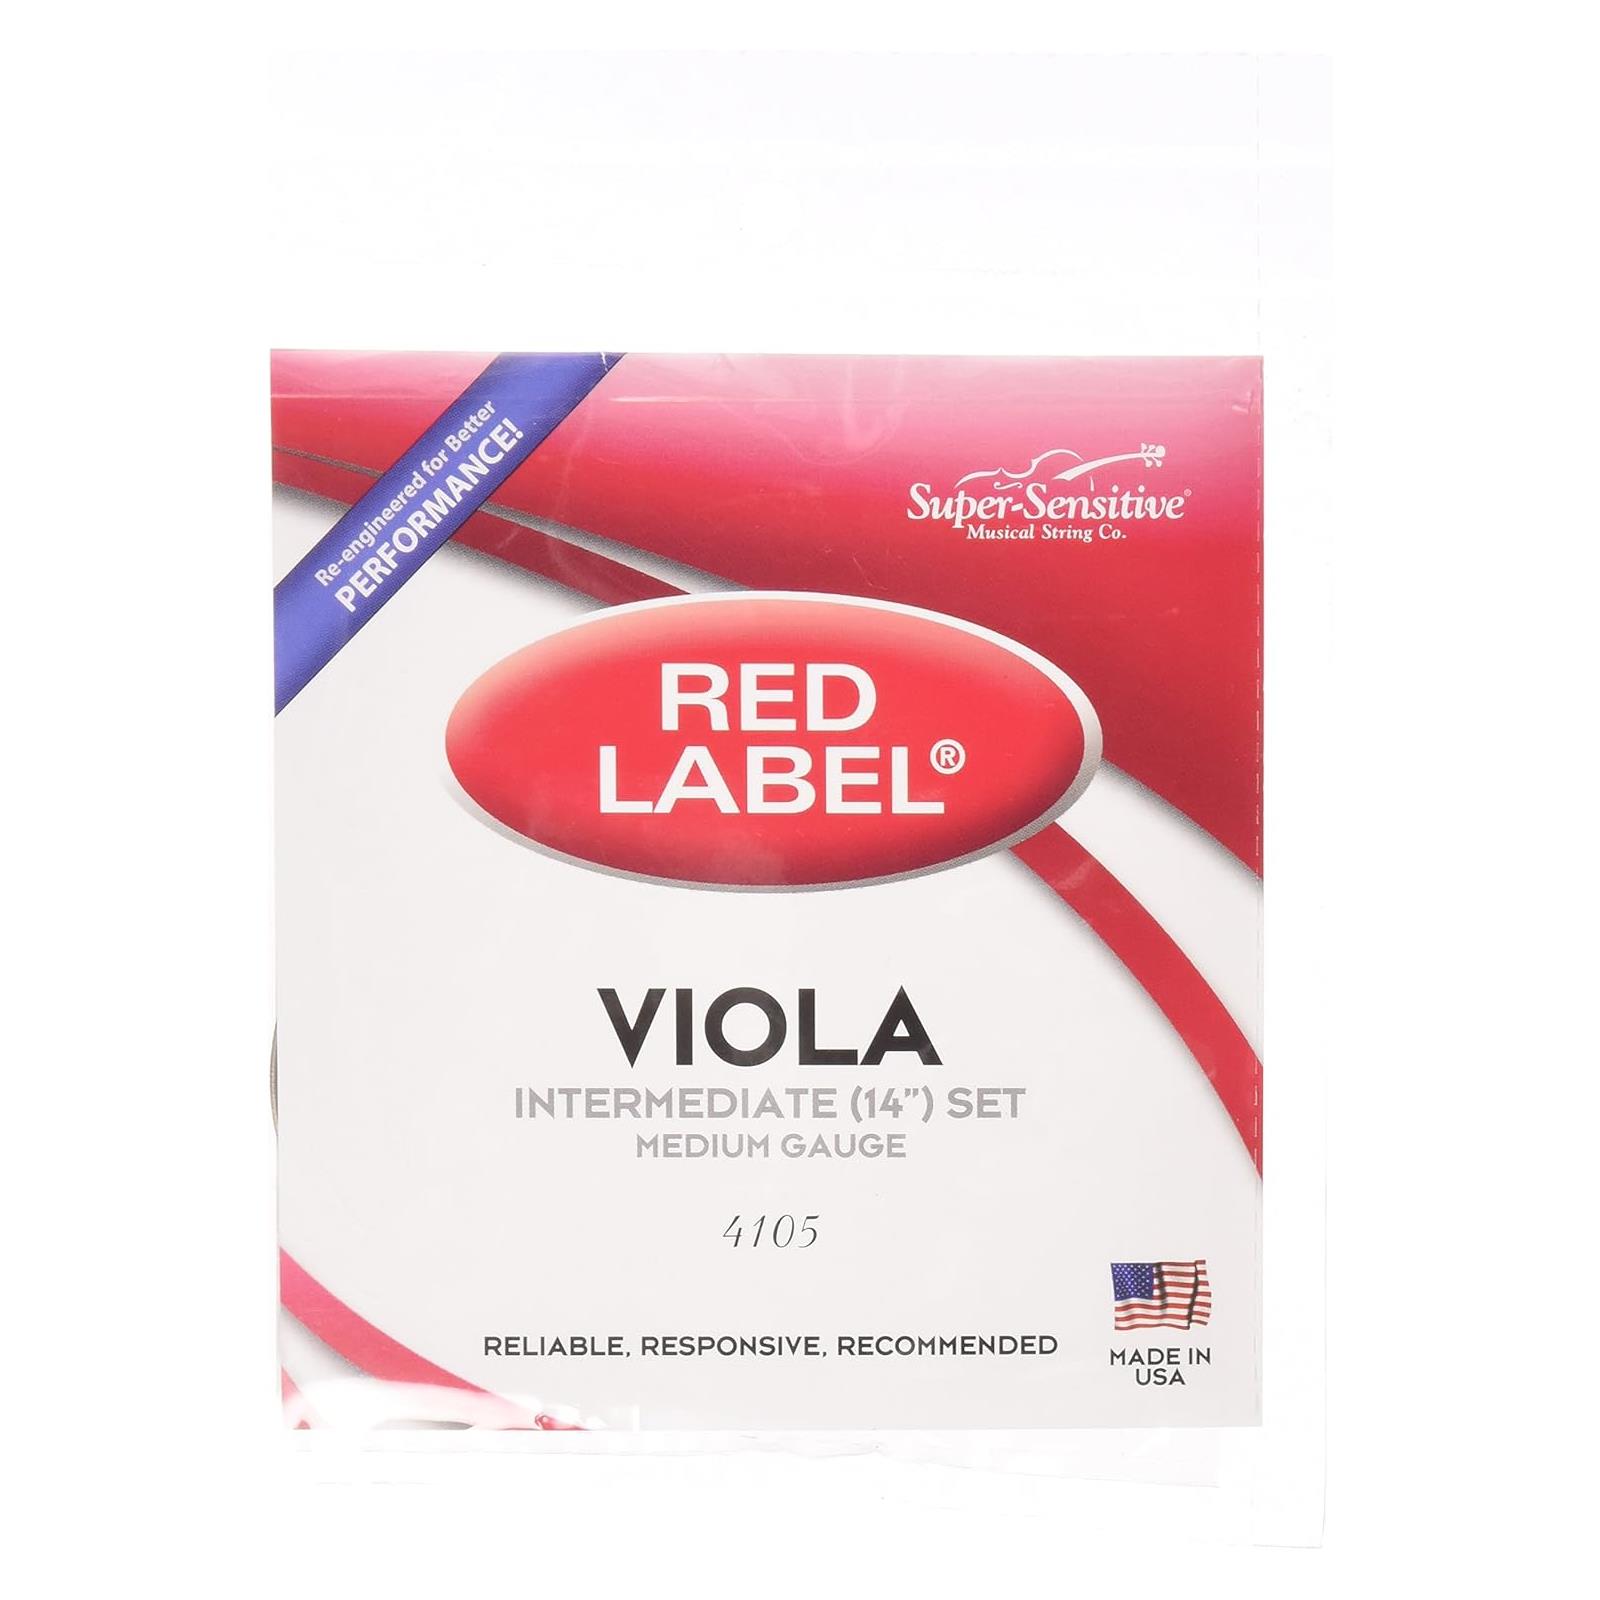 Super-Sensitive Red Label Viola C Single String, 14" Scale